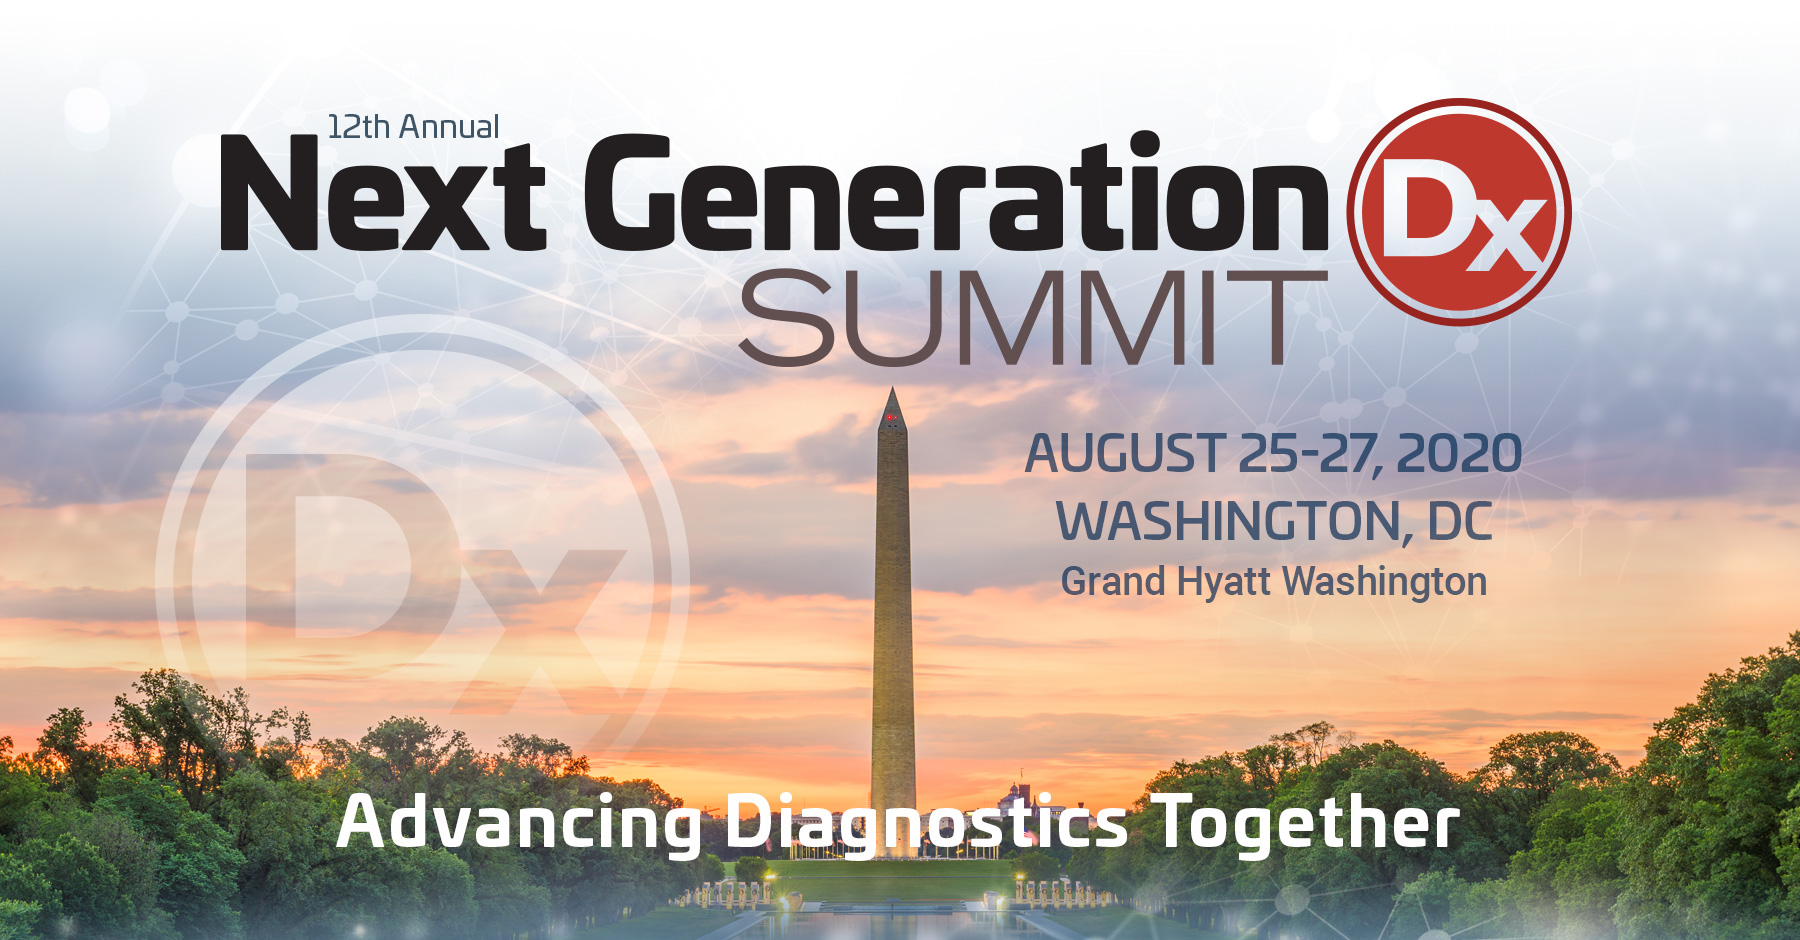 Next Generation Dx Summit Cambridge Healthtech Institute